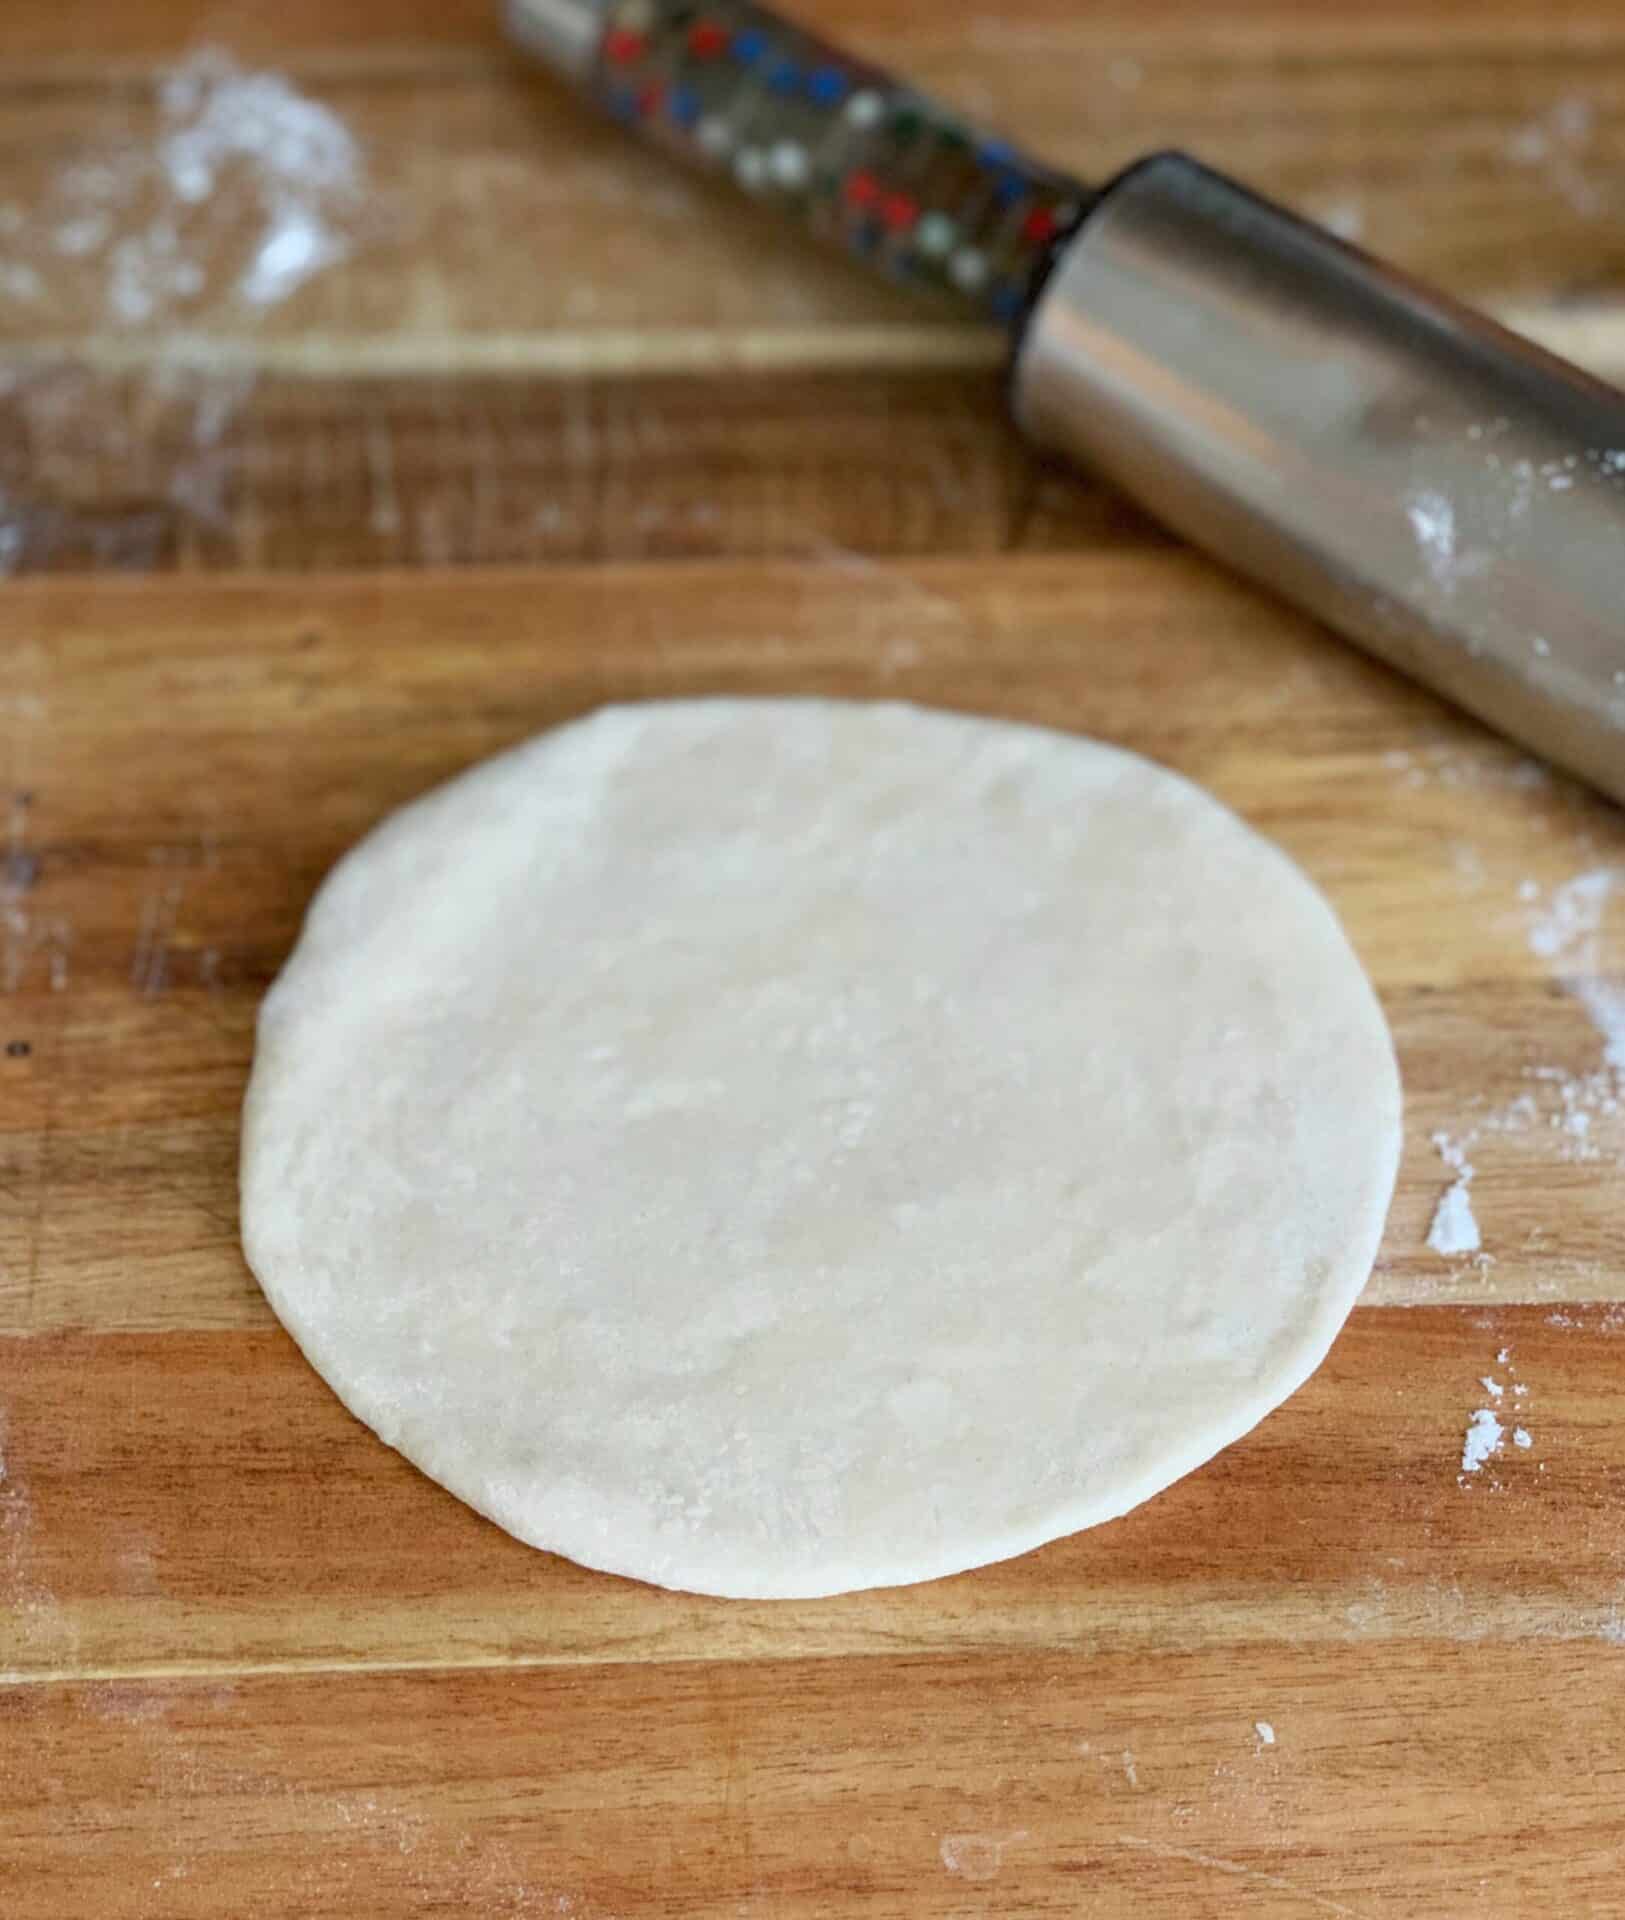 A flat dough ball ready for frying